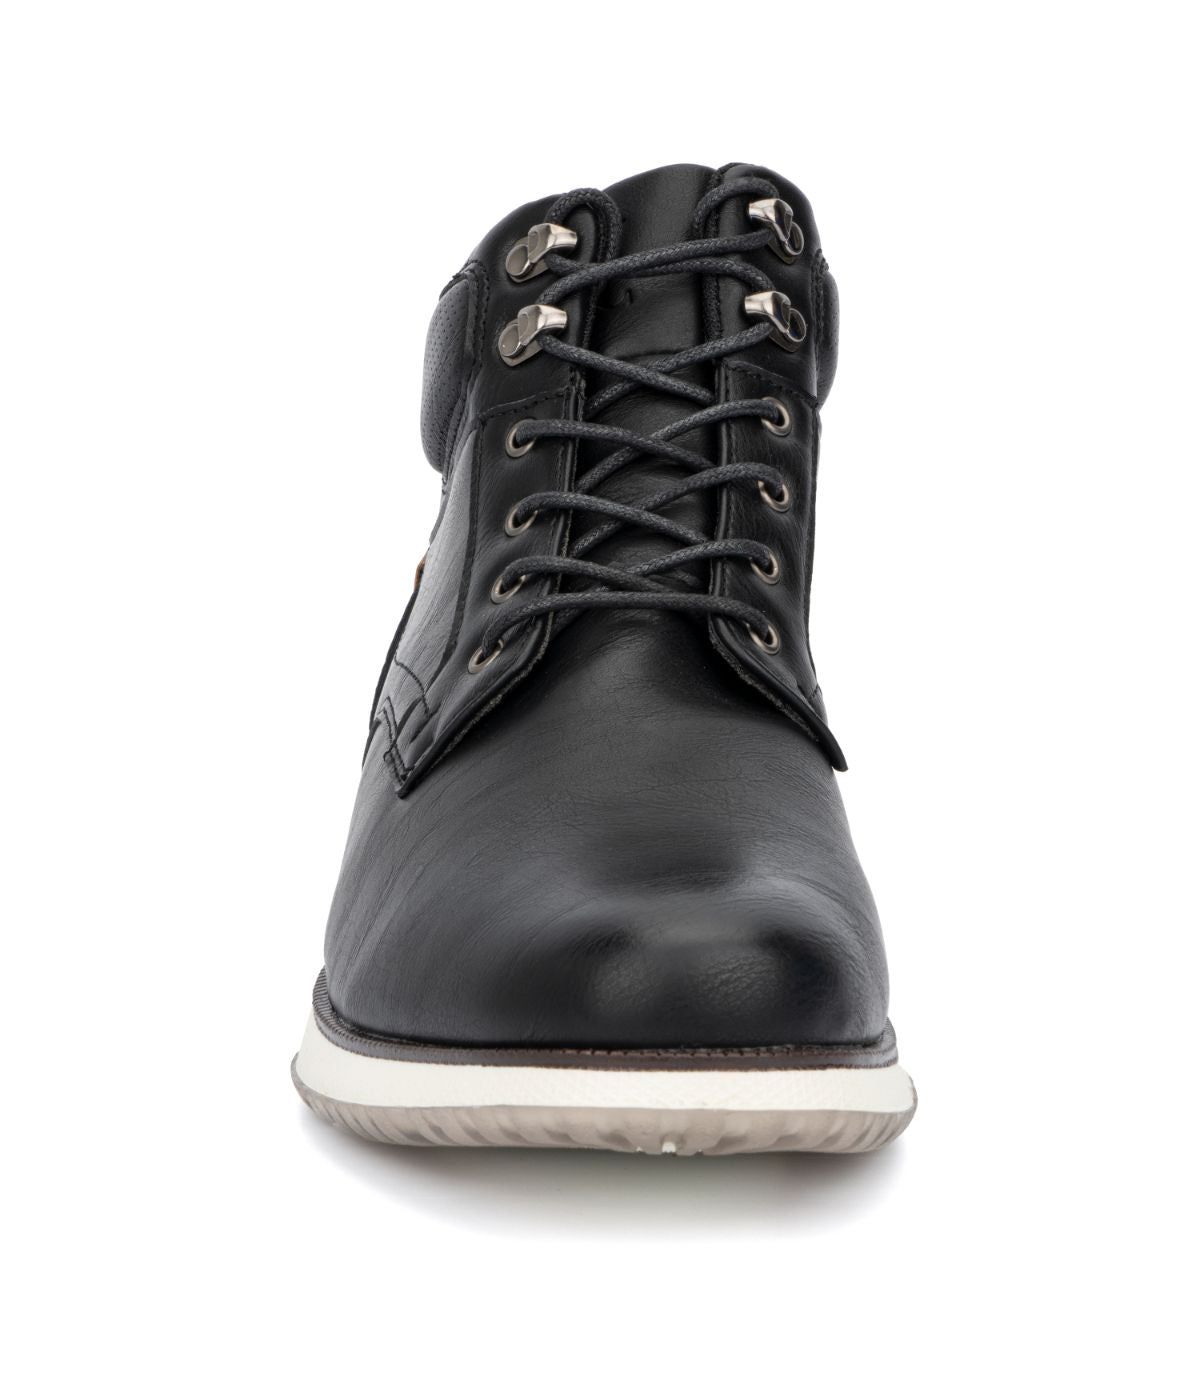 New York & Company Men's Gideon Boot Black